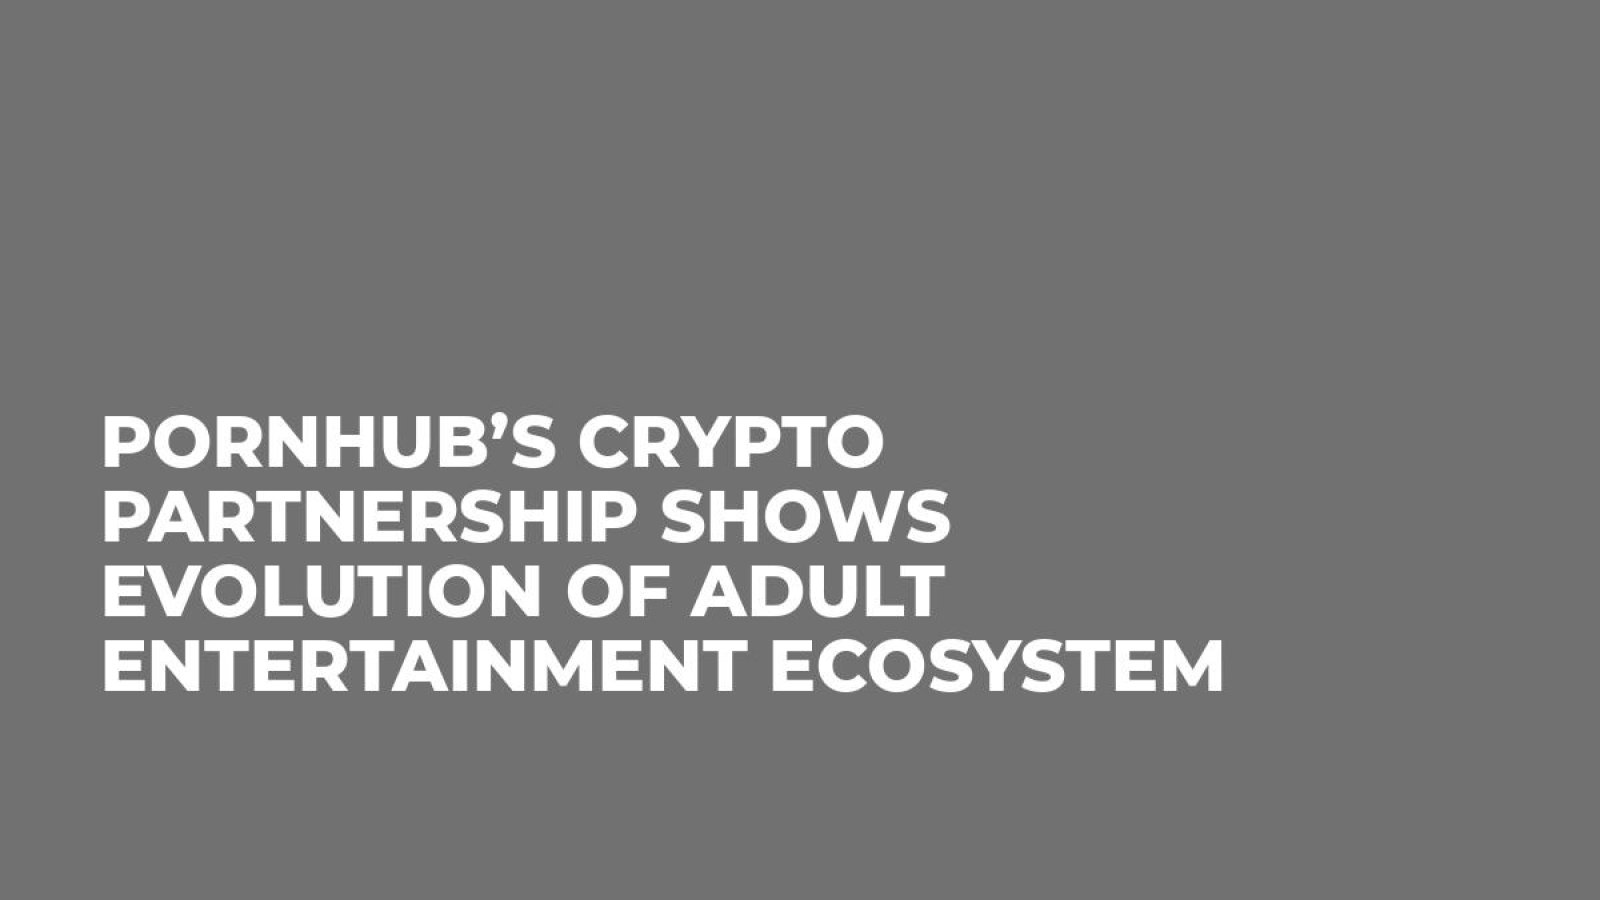 PornHub’s Crypto Partnership Shows Evolution of Adult Entertainment Ecosystem